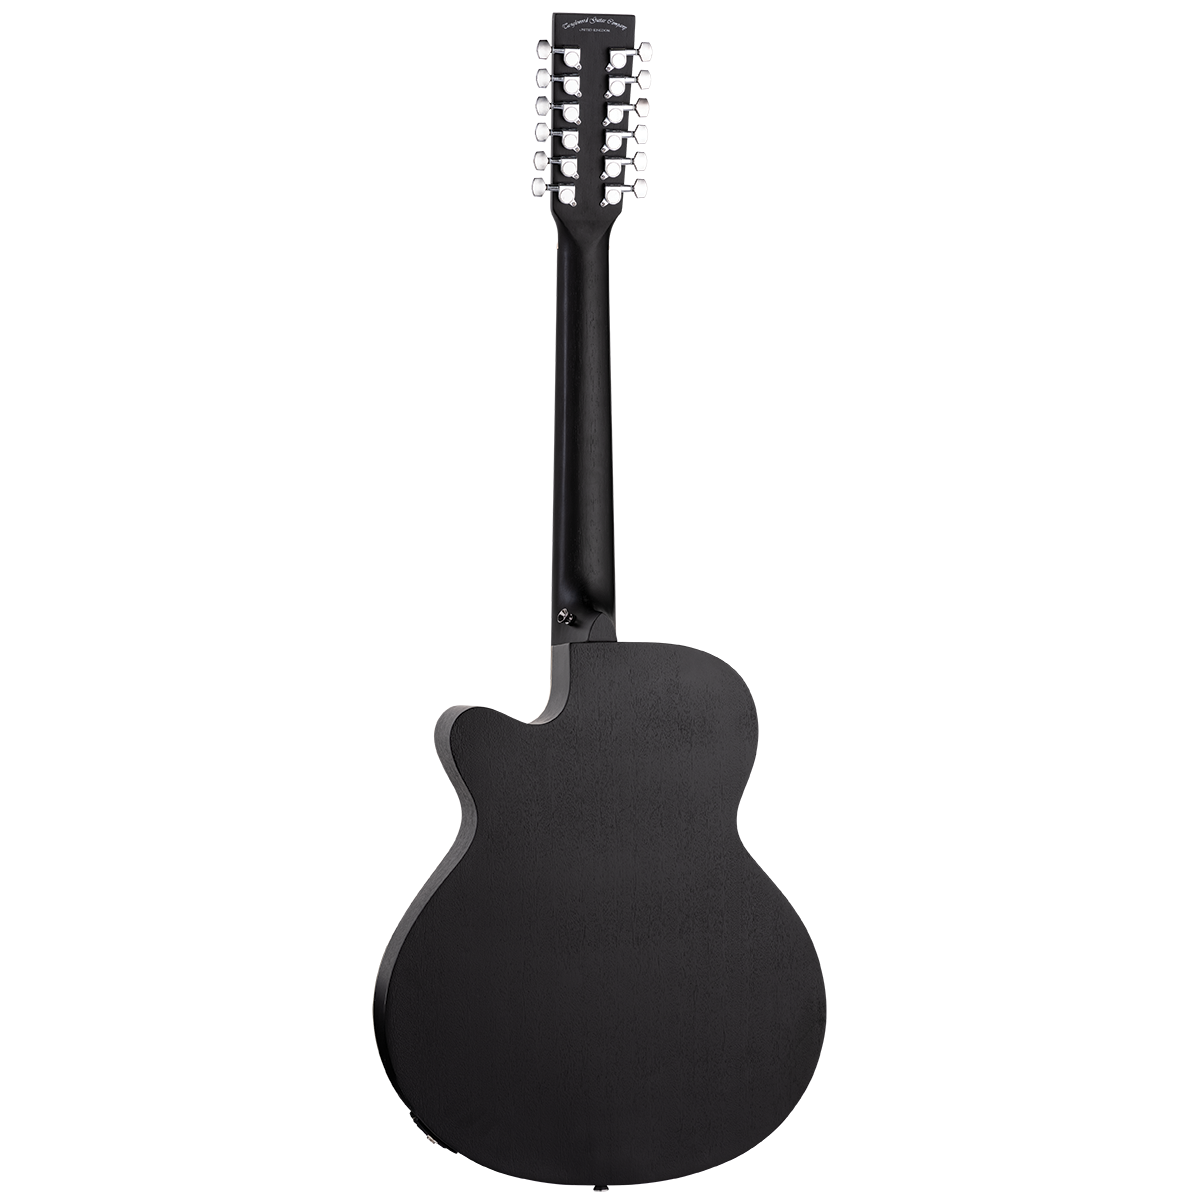 Tanglewood Blackbird Superfolk 12-String Acoustic Electric Guitar (Smokestack Satin)